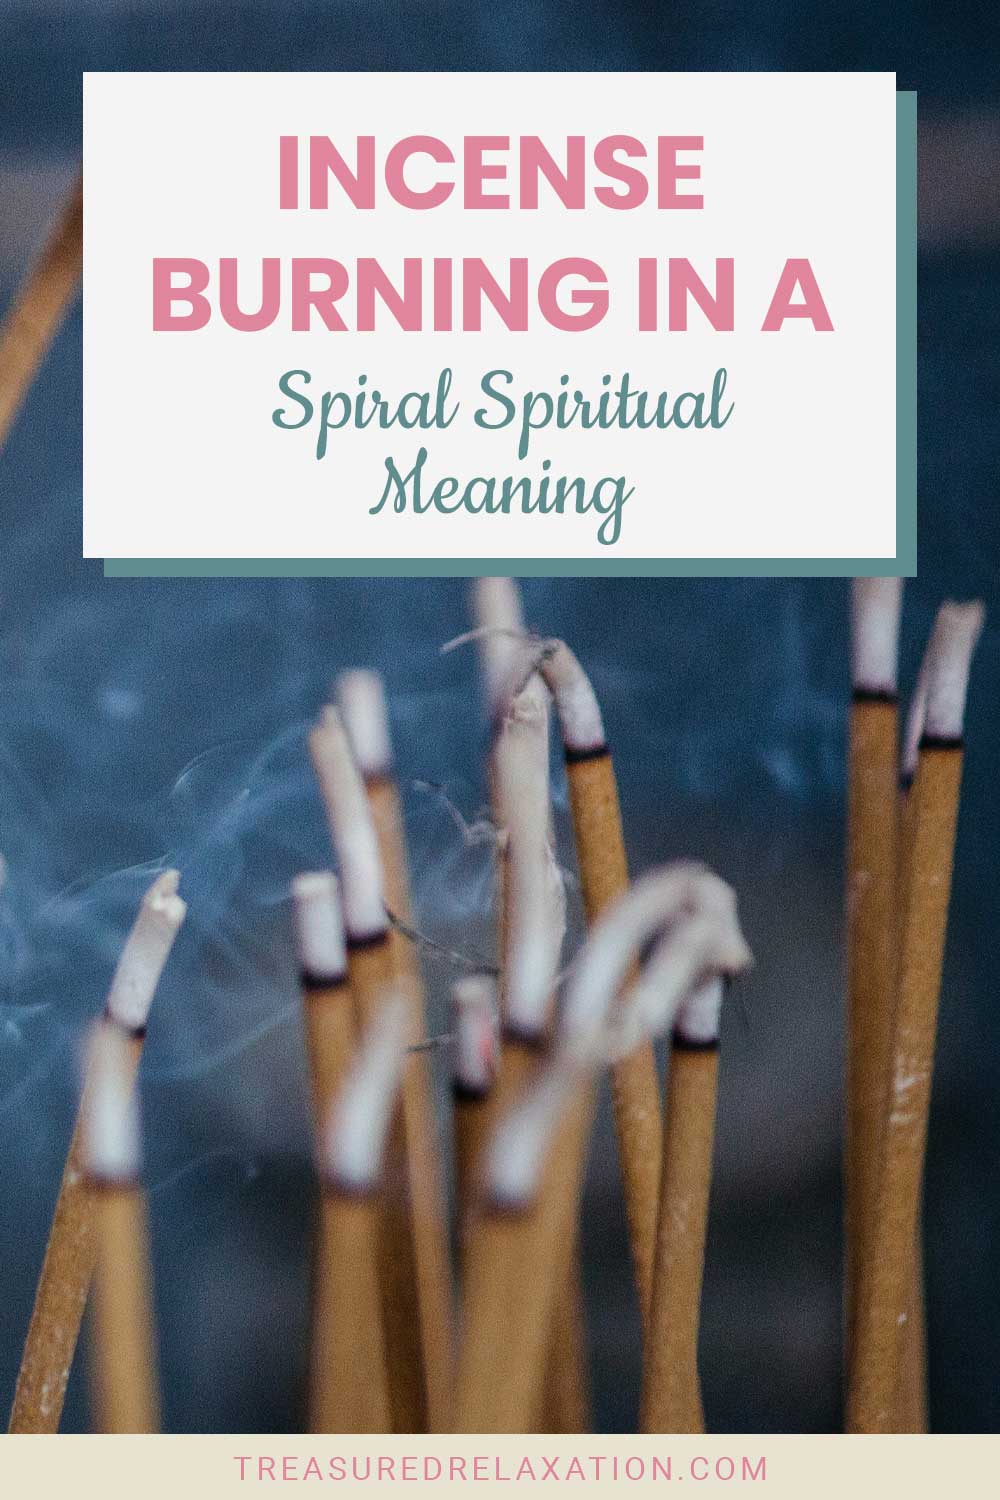 Incense sticks burning - Incense Burning in a Spiral Spiritual Meaning.